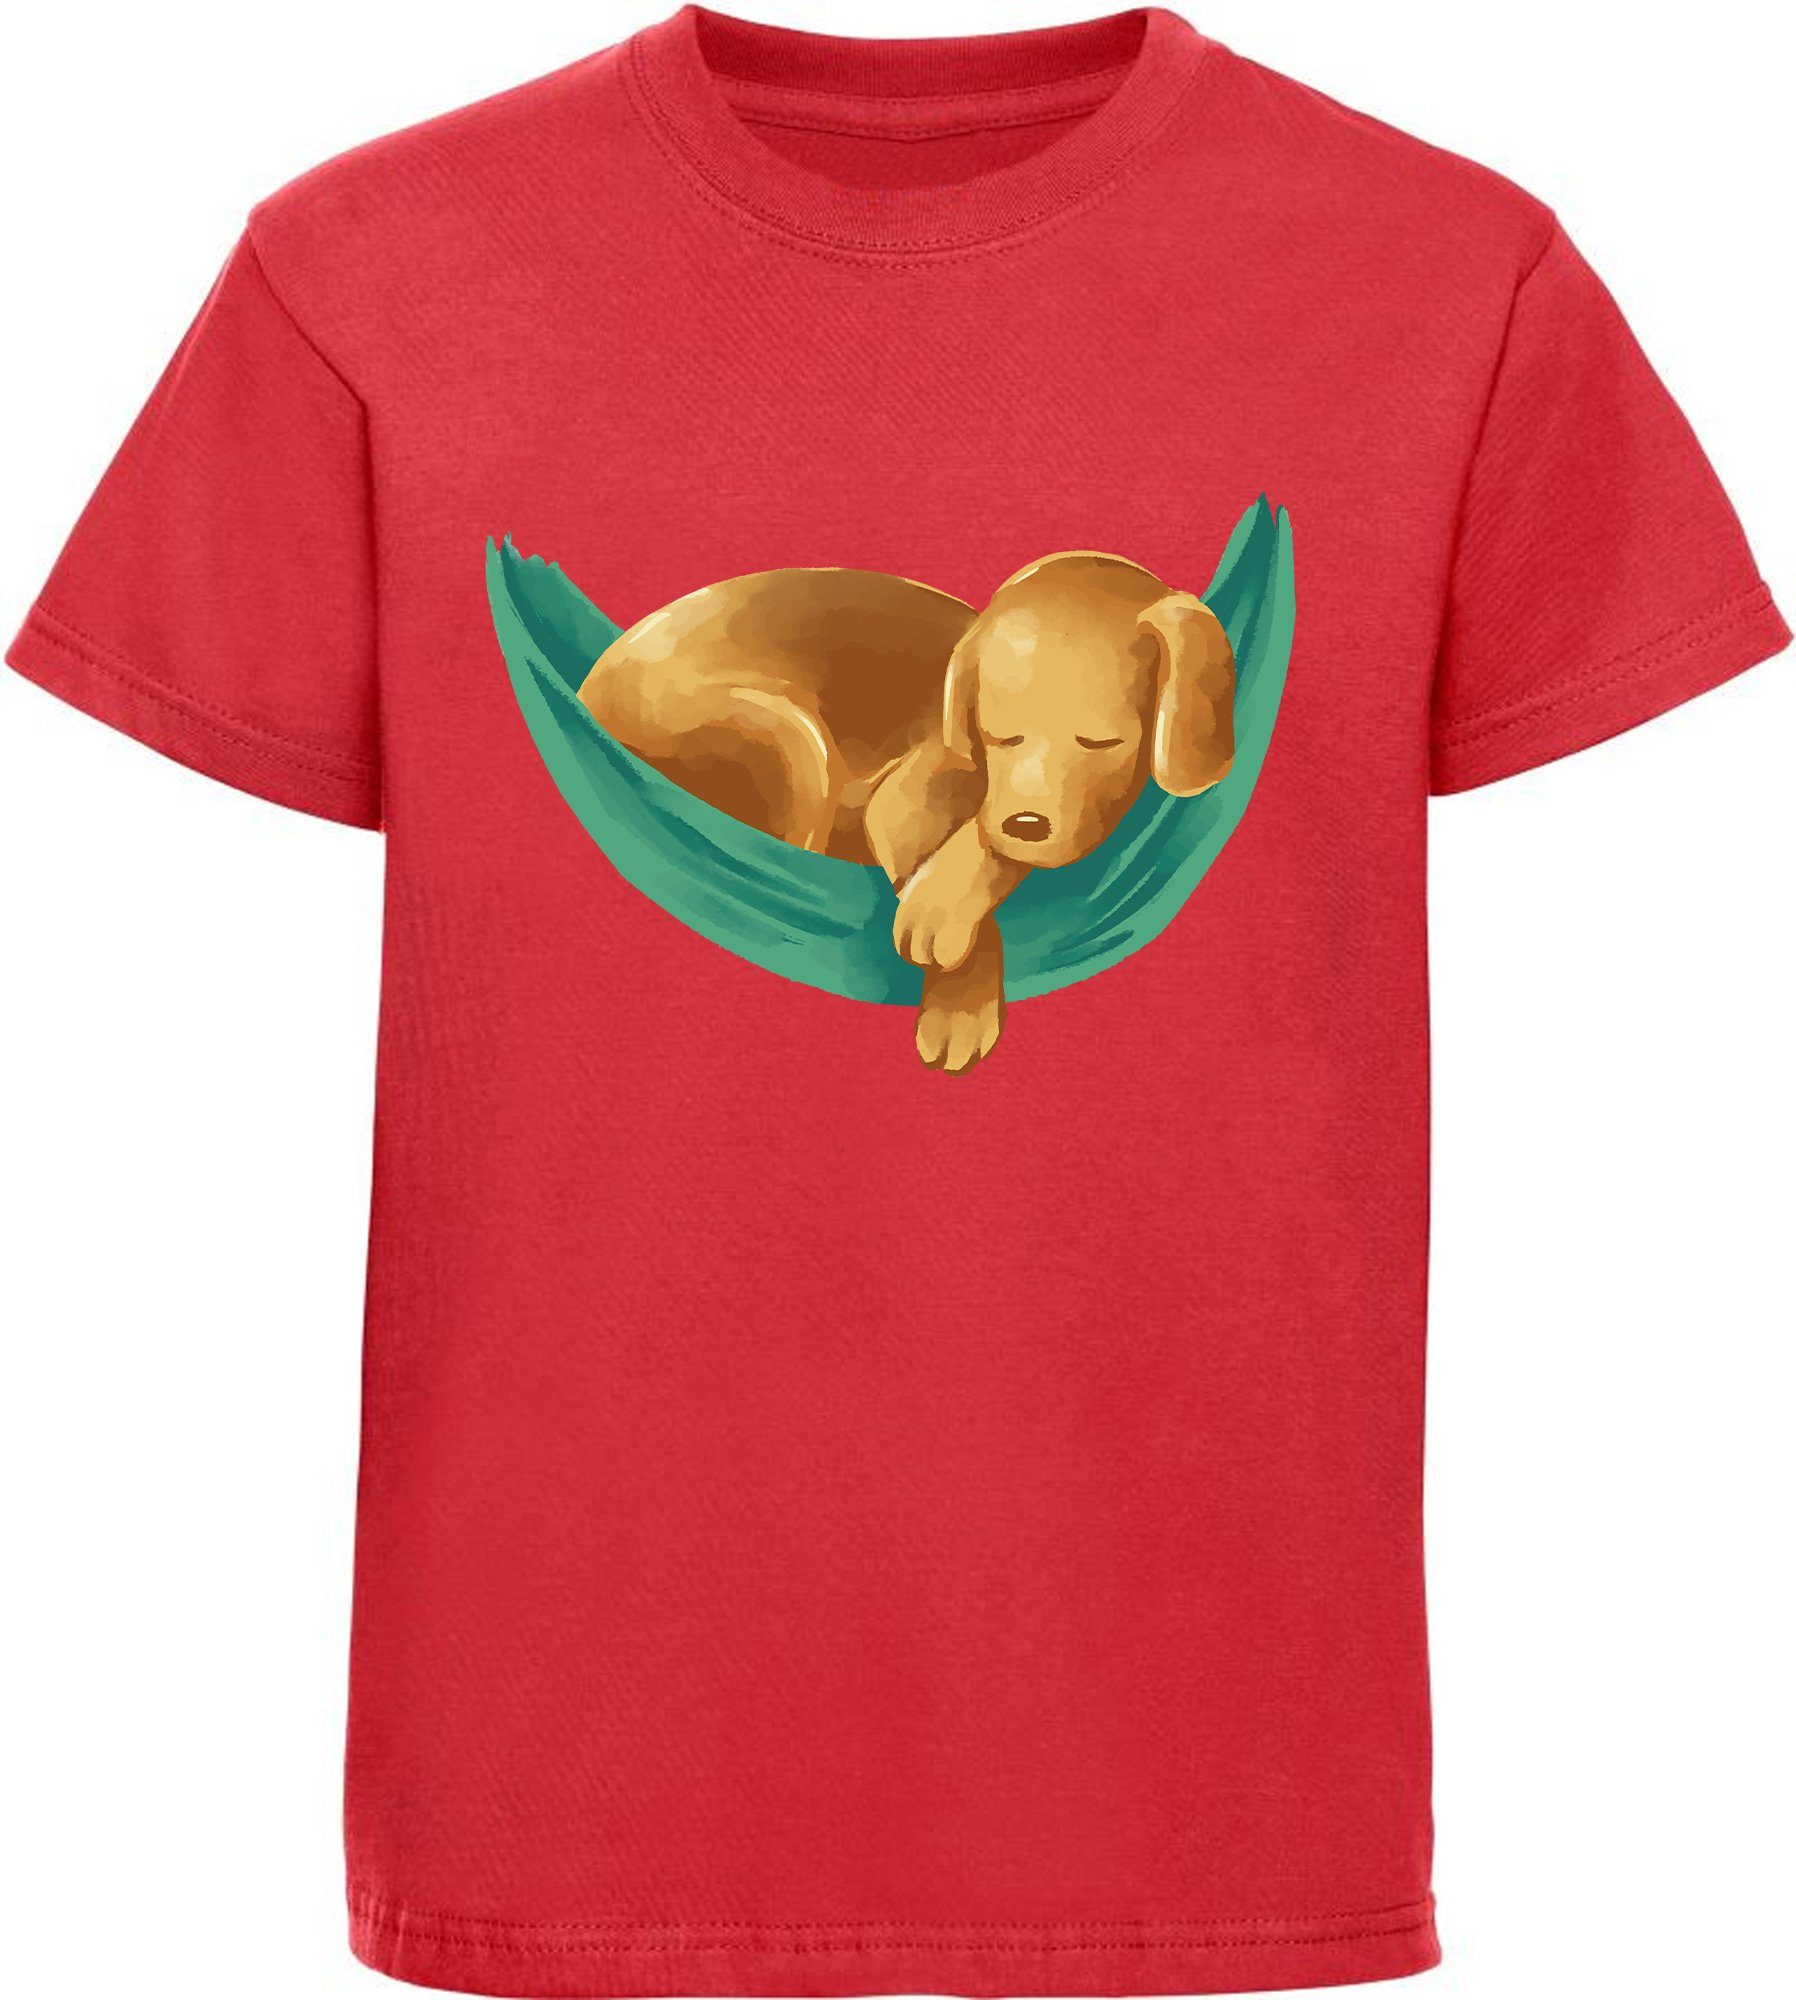 MyDesign24 T-Shirt Kinder Hunde Print Shirt bedruckt - Labrador Welpe in Hängematte Baumwollshirt mit Aufdruck, i245 rot